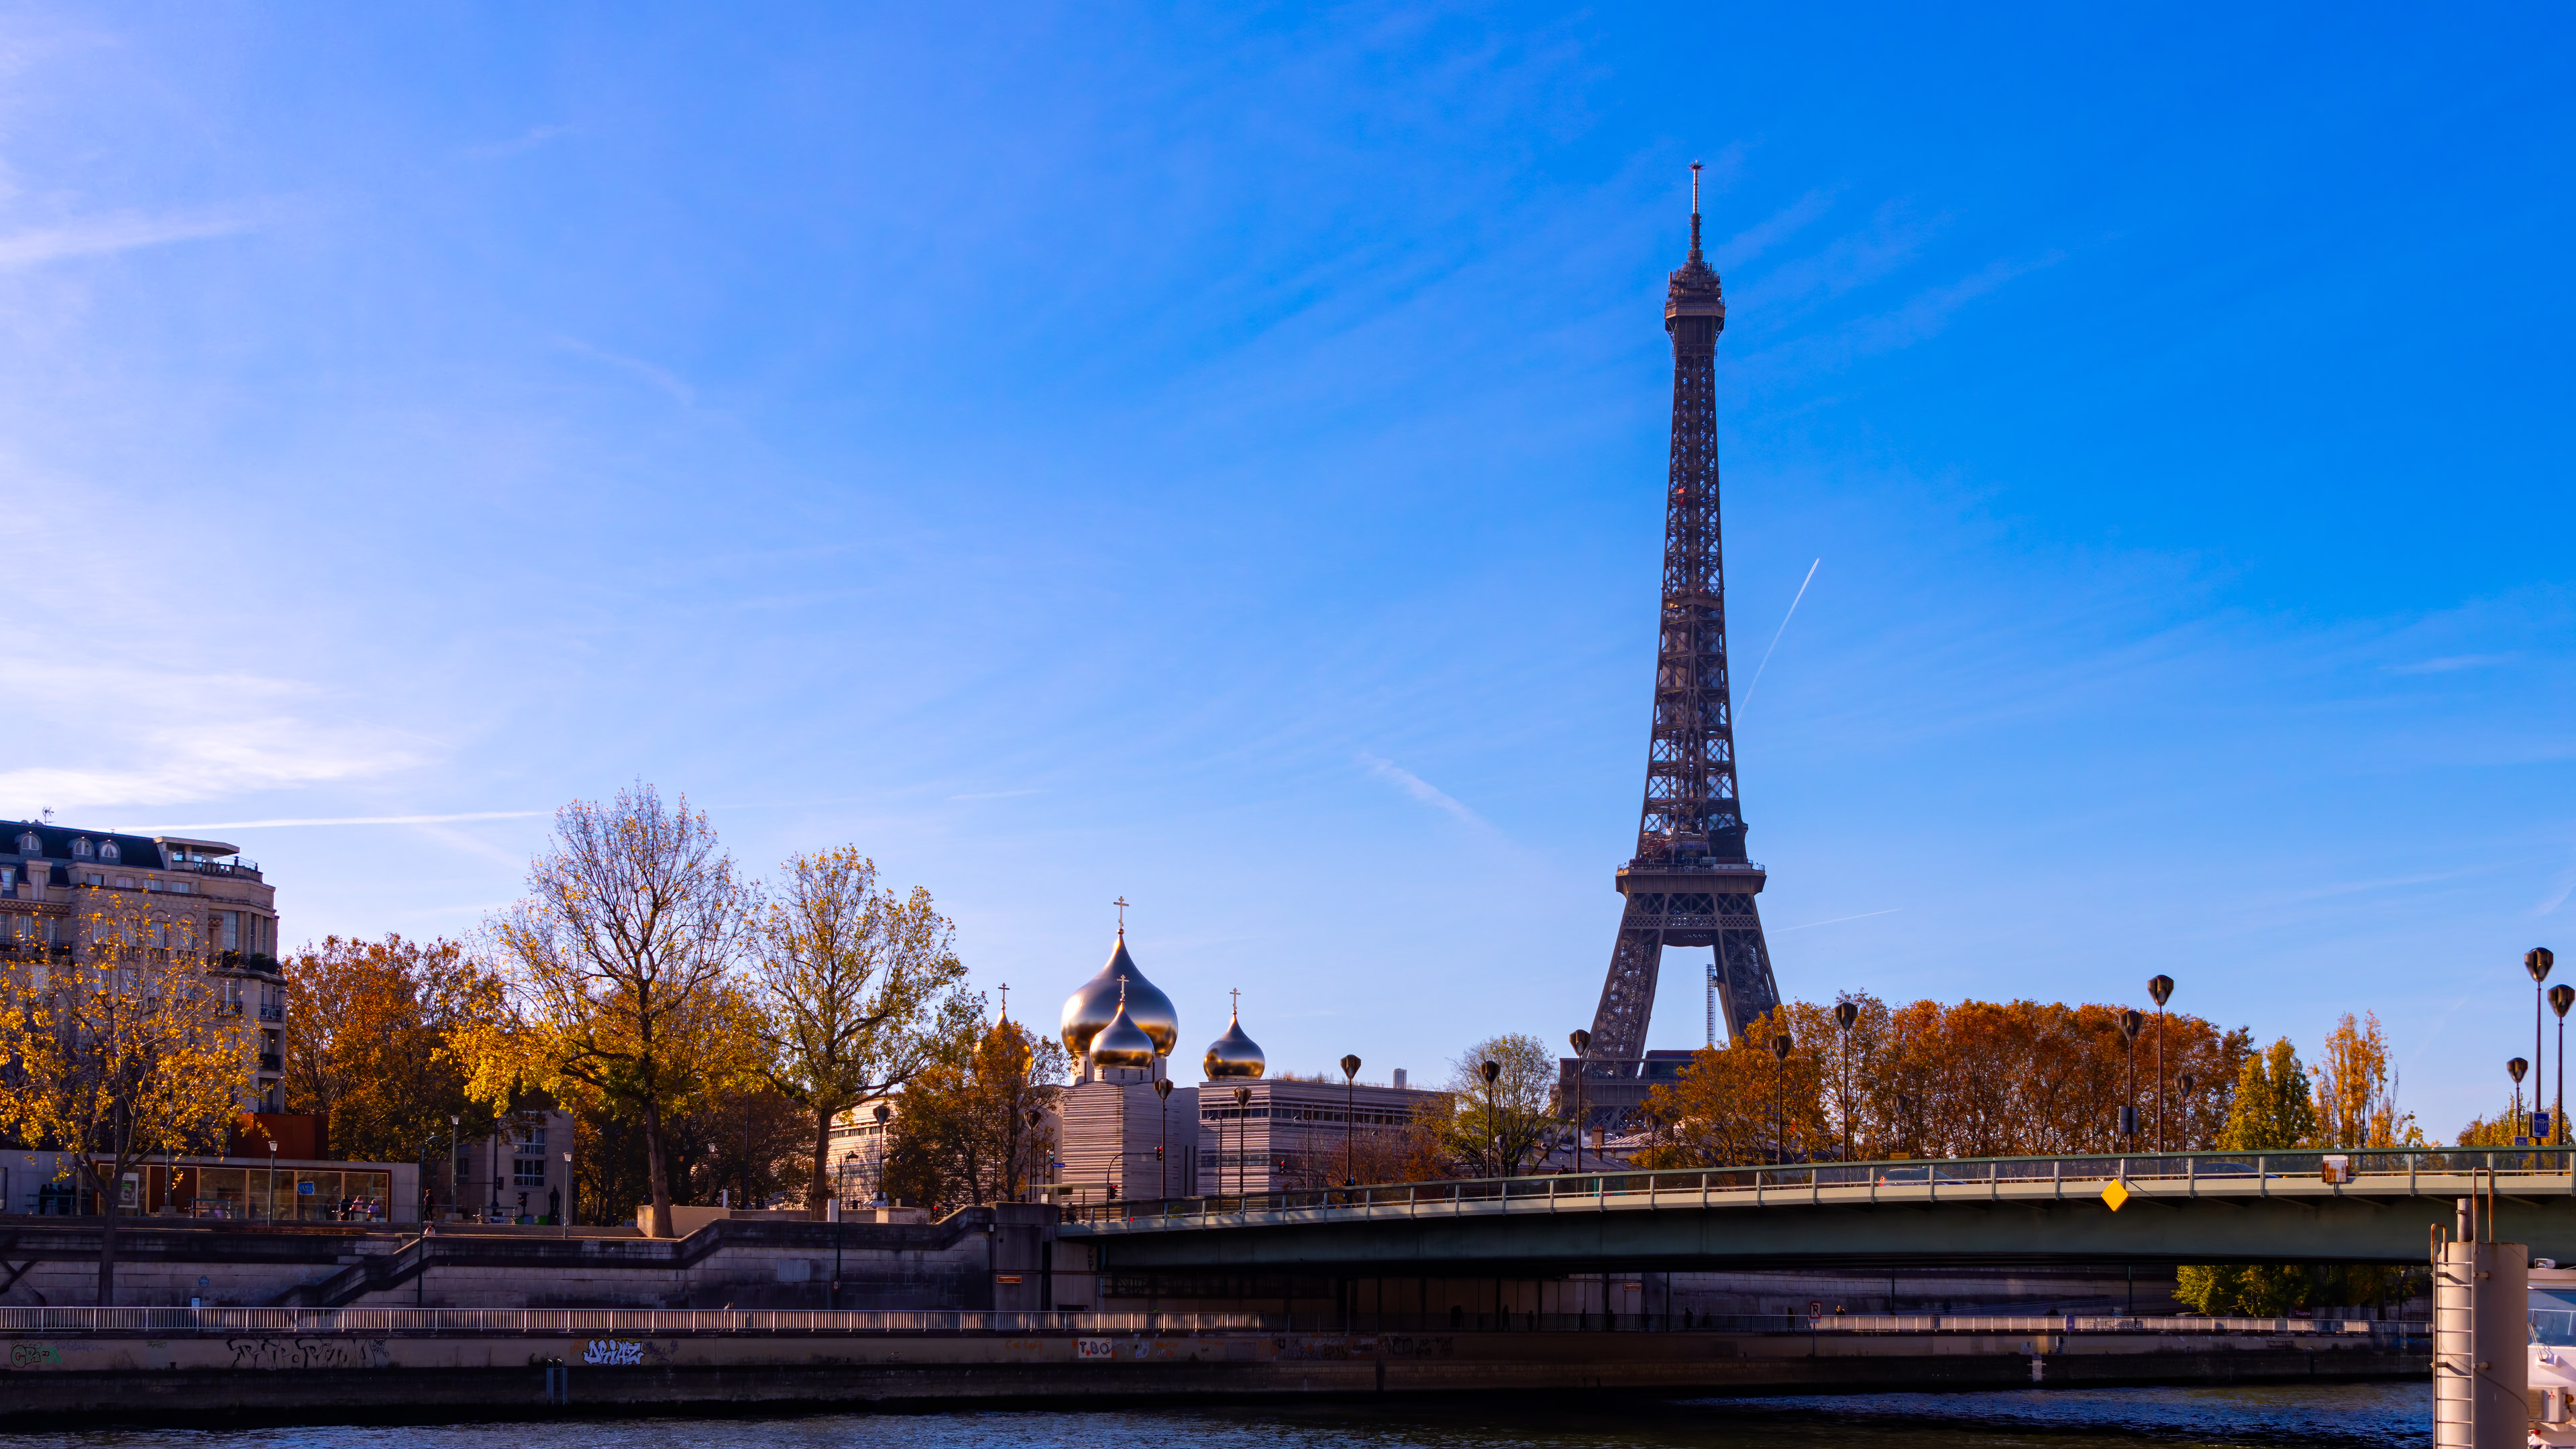 best computer wallpaper of Eiffel Tower in Paris in 4K Ultra HD resolution